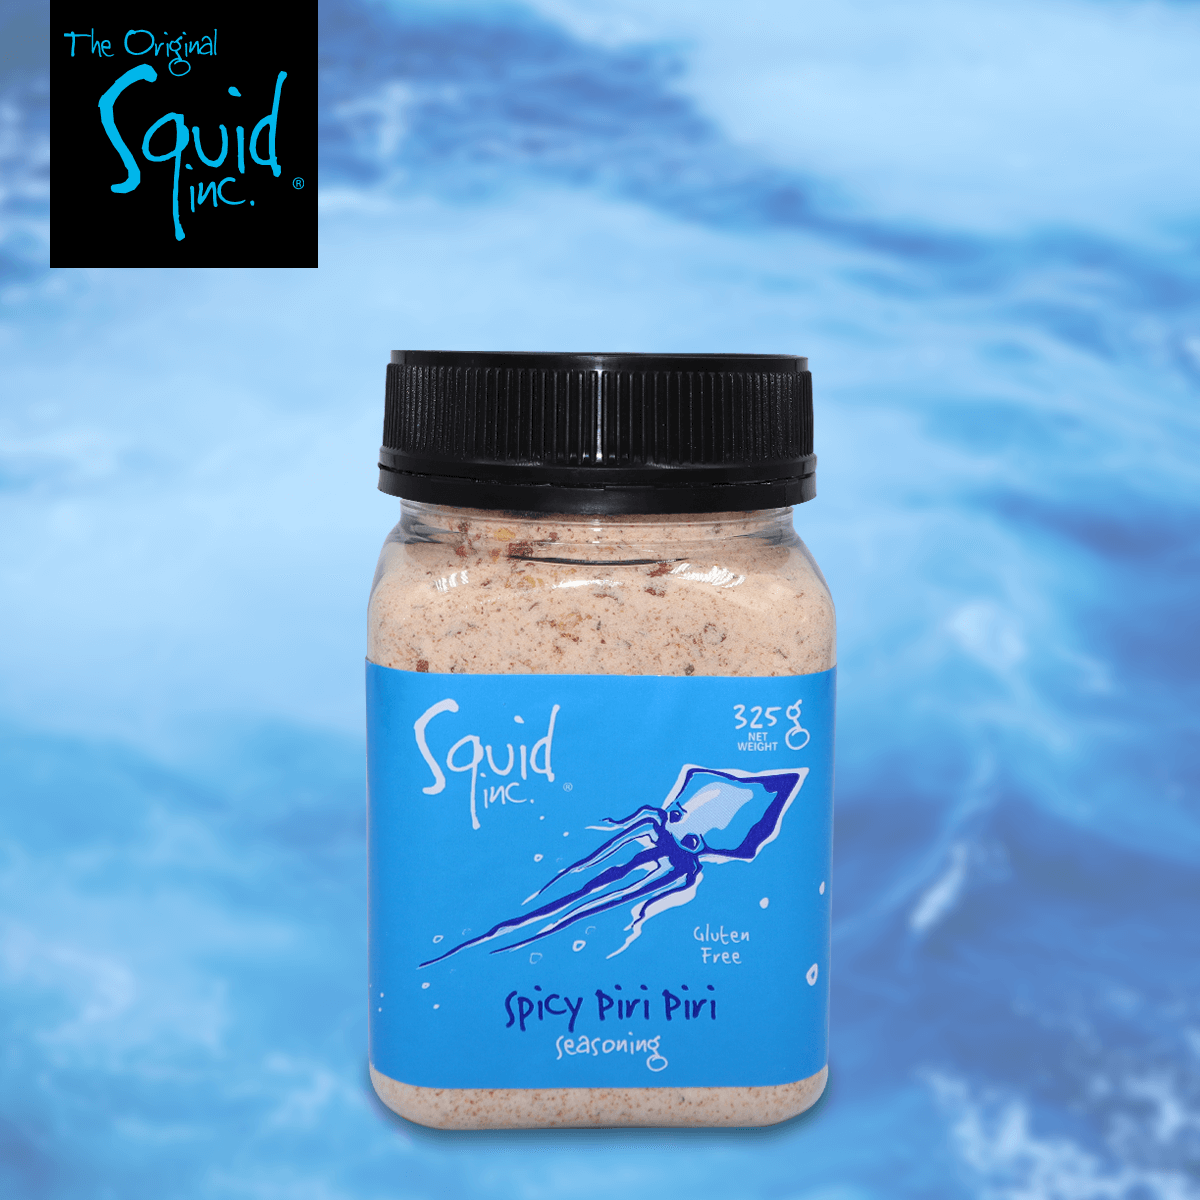 Squid-Inc-Seasonings-Spicy-Piri-Piri